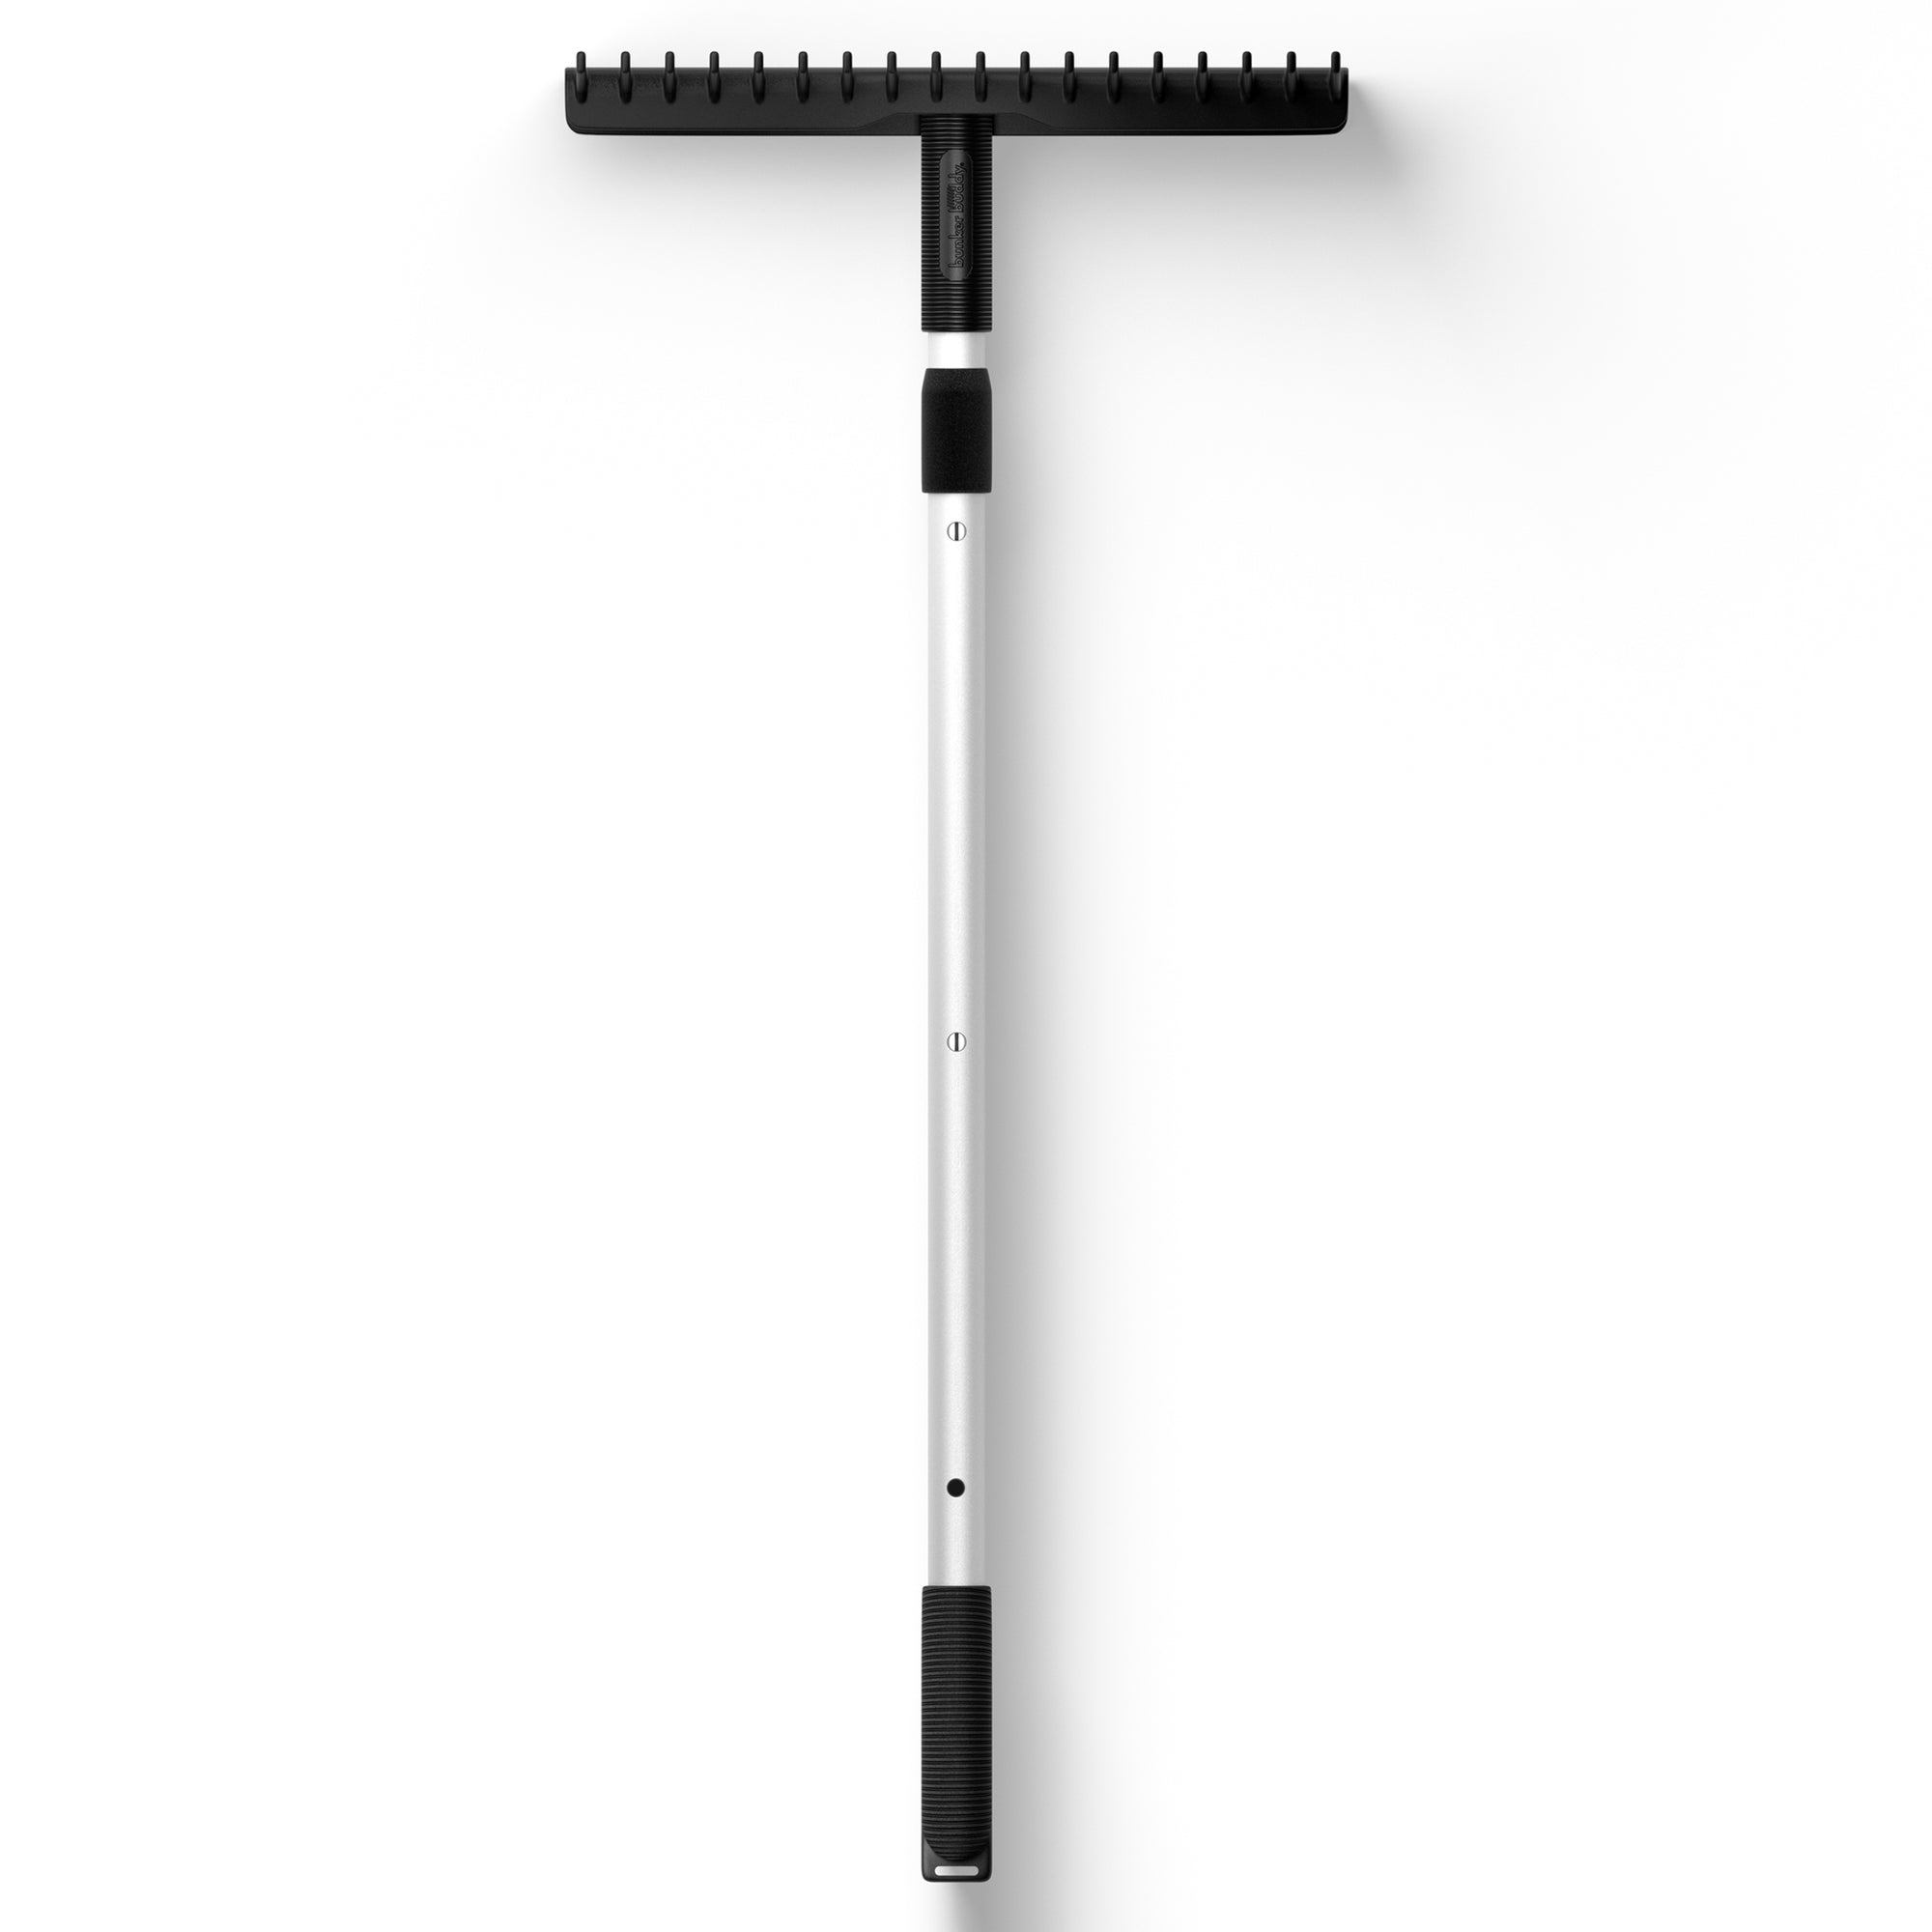 Bunker Buddy Golf Rake on white background. Black handle with satin metal pole and black rake head.